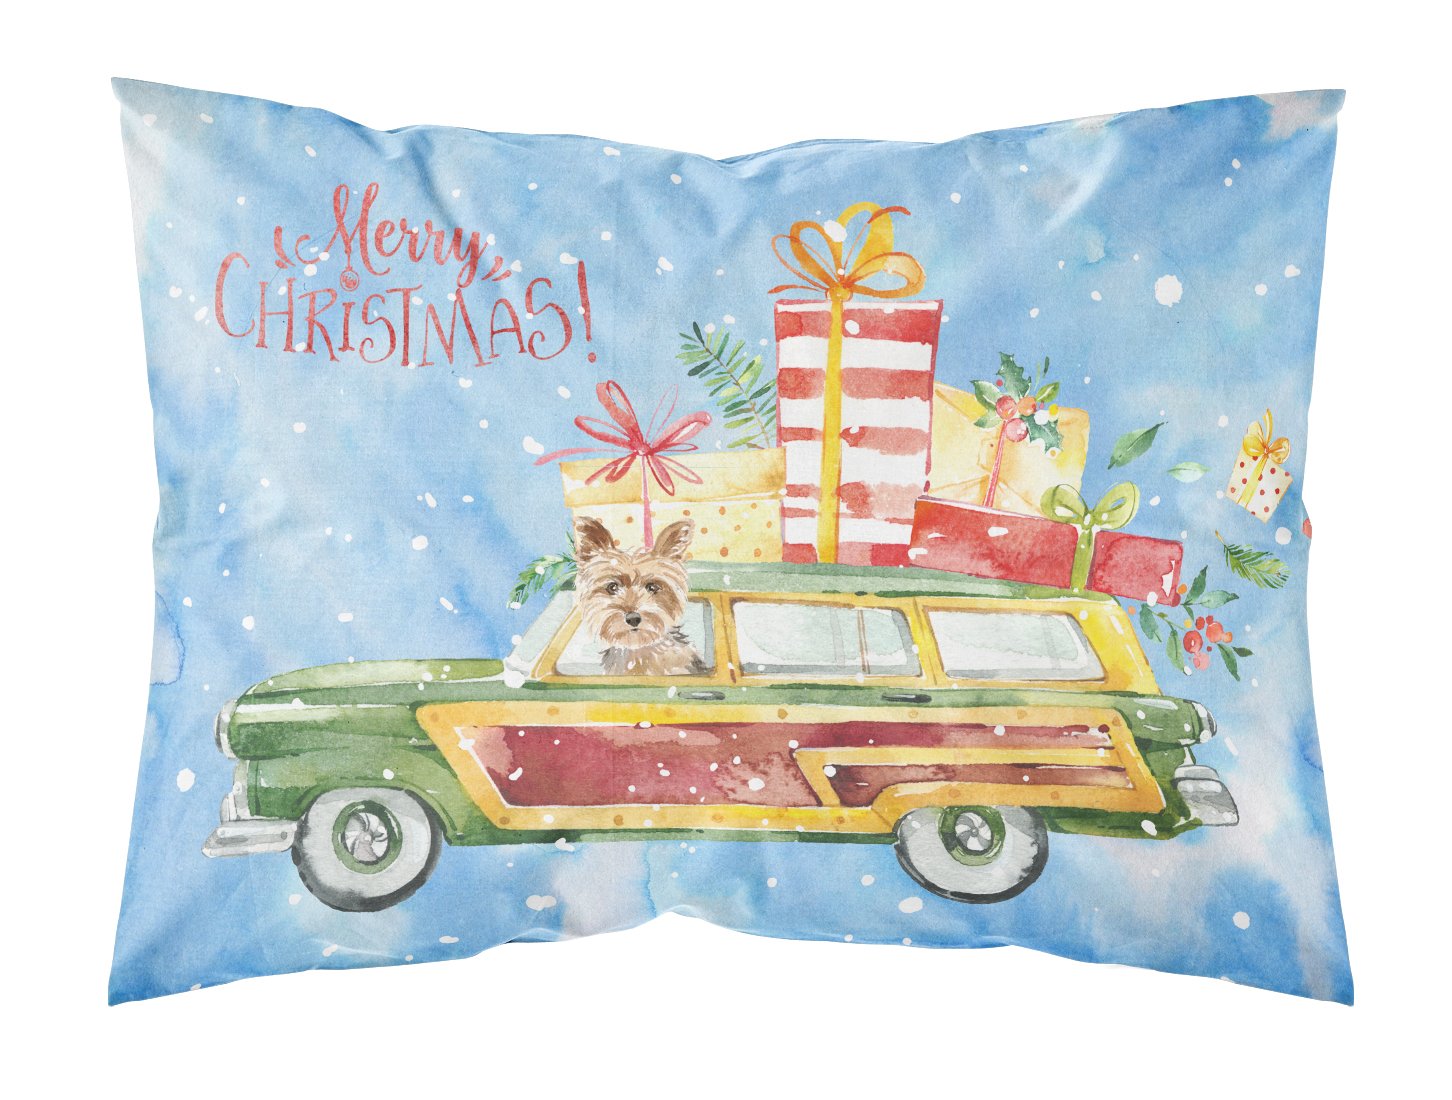 Merry Christmas Yorkshire Terrier Fabric Standard Pillowcase CK2431PILLOWCASE by Caroline's Treasures